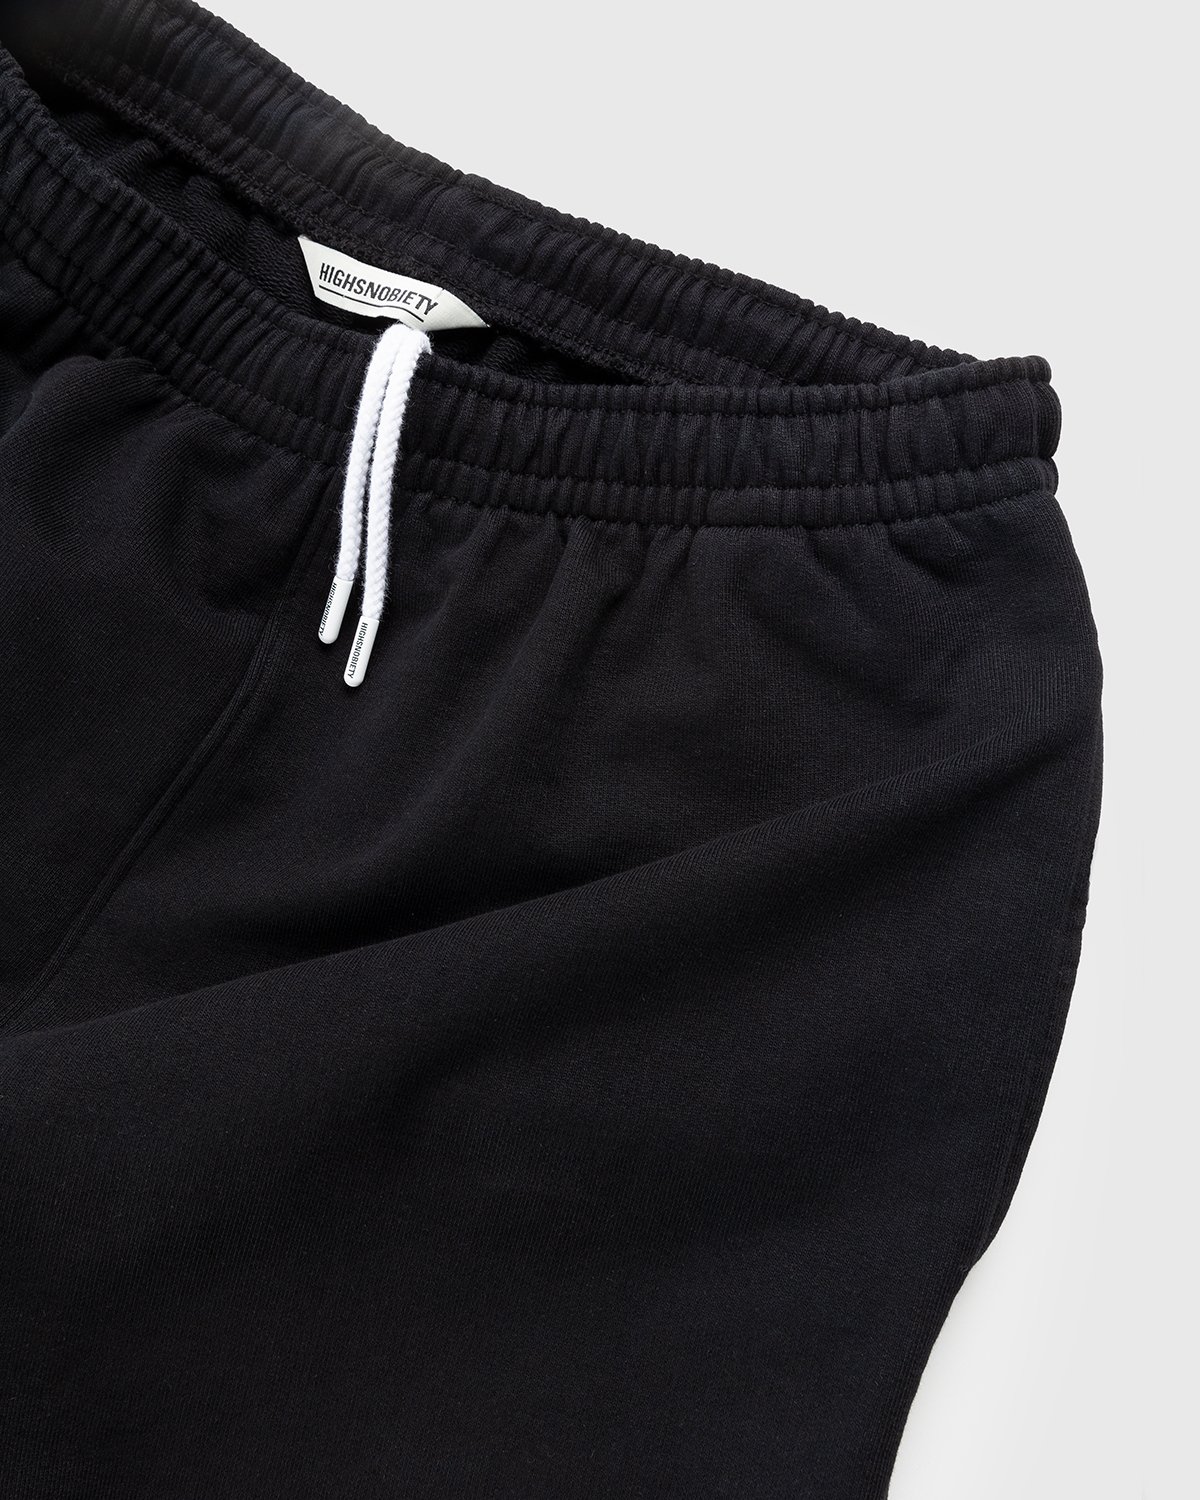 Highsnobiety - Staples Shorts Black - Clothing - Black - Image 5